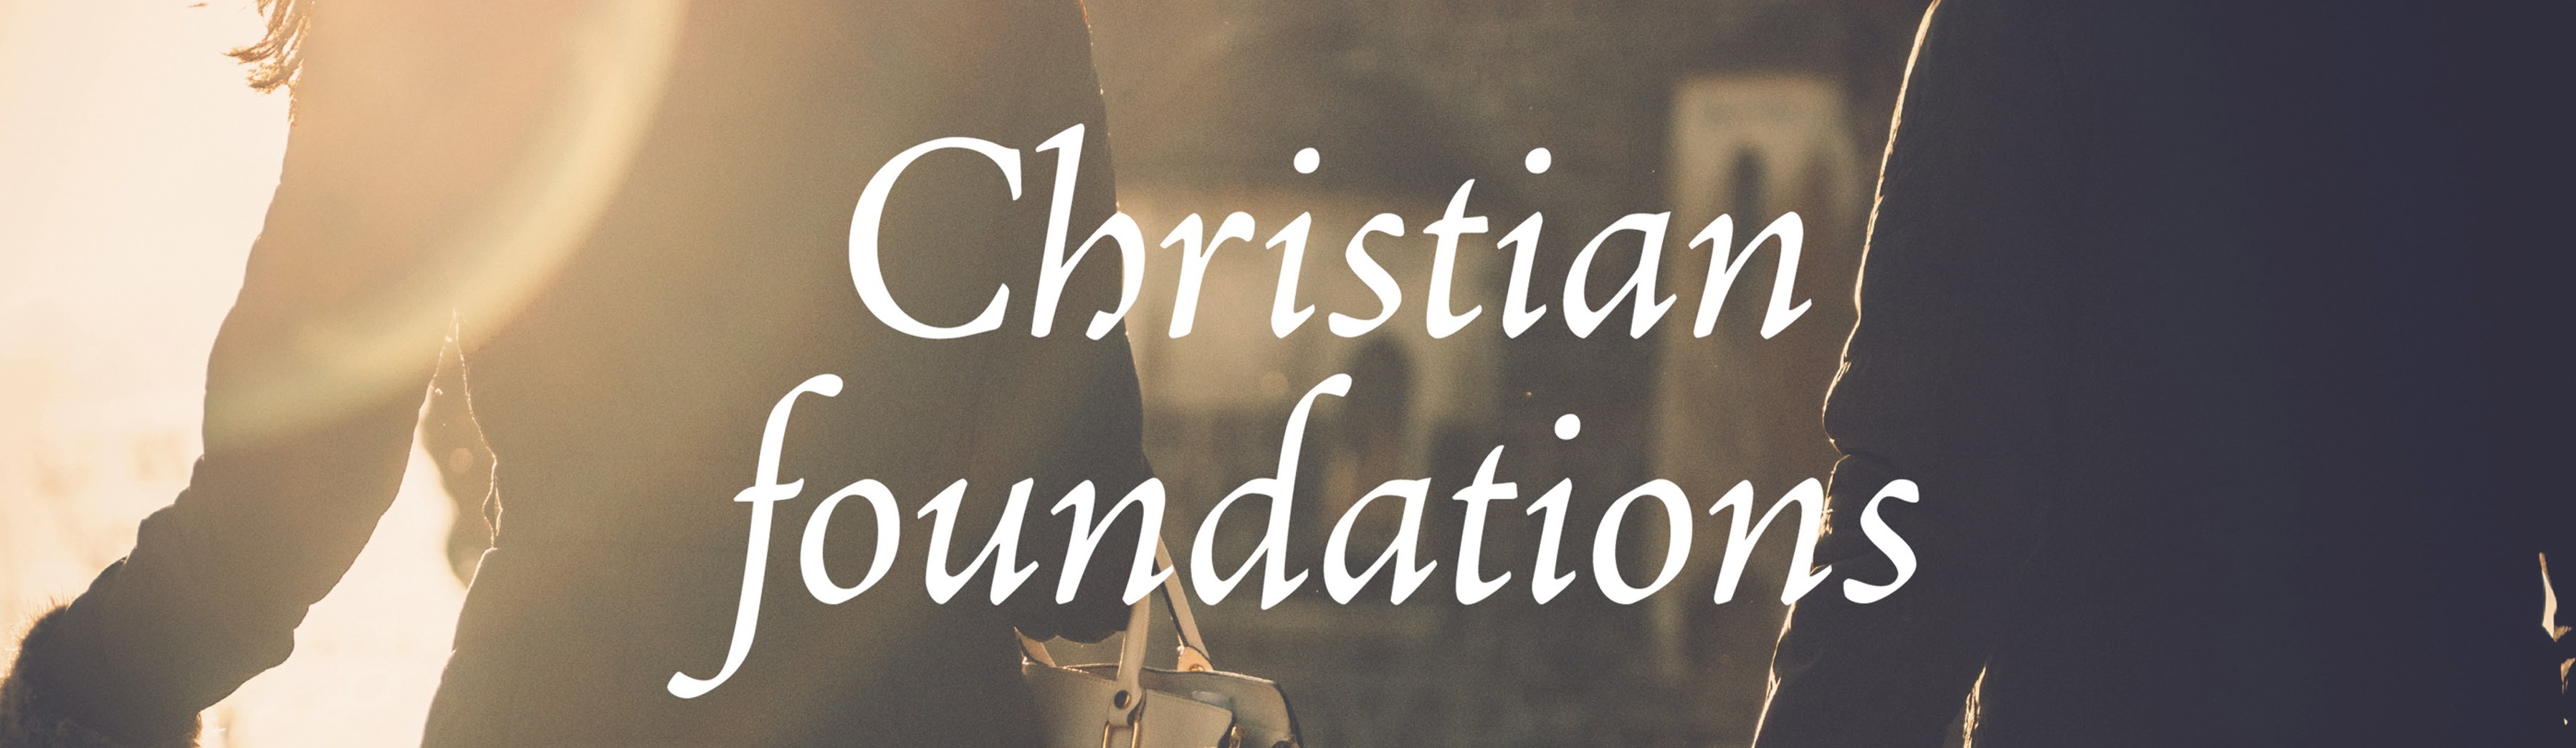 christian foundation